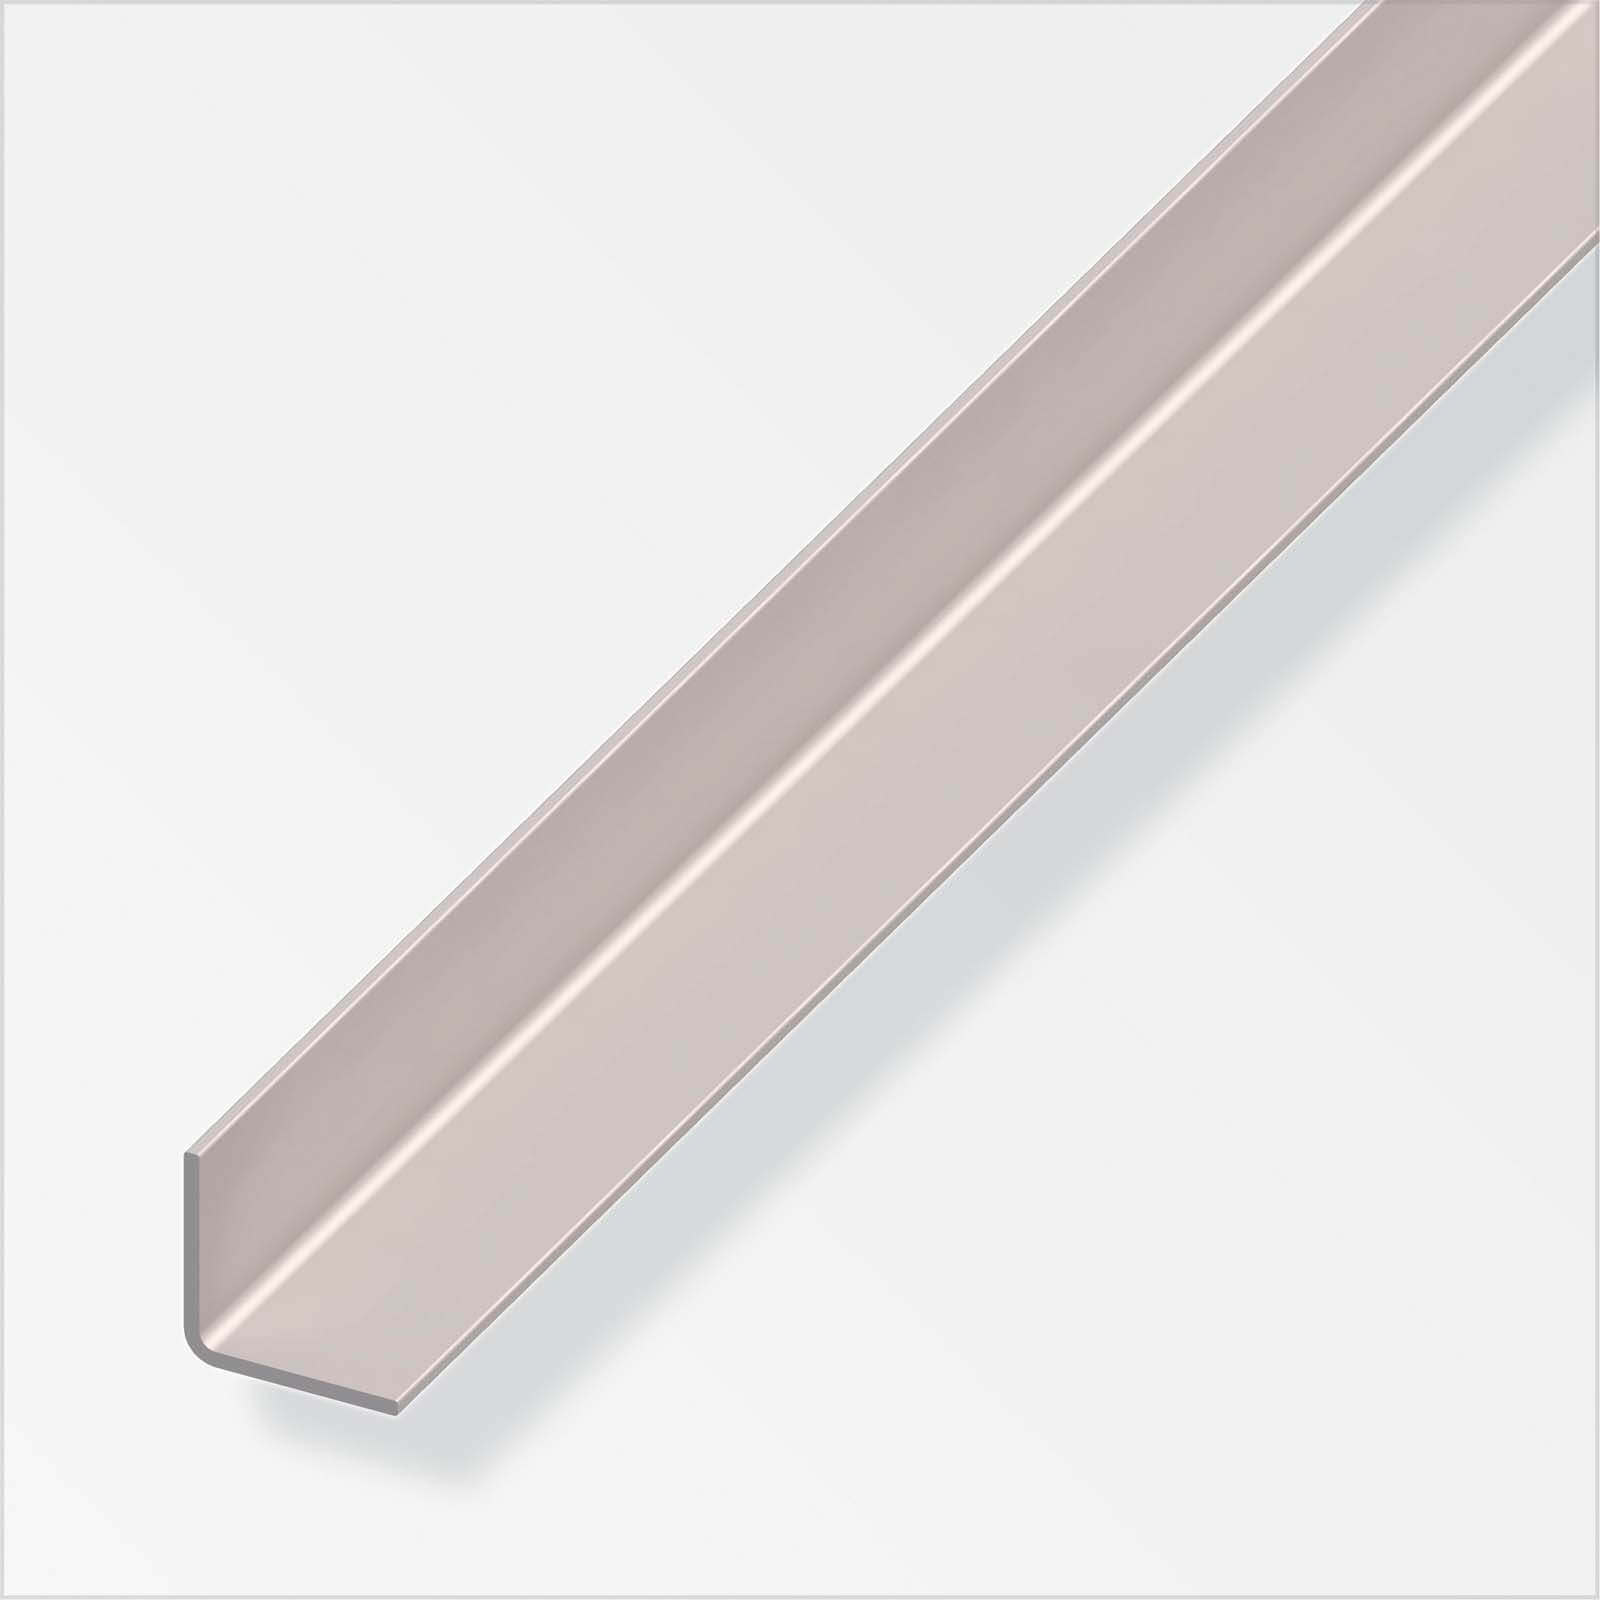 Photo of Cr Steel Equal Angle Profile - 1m X 25 X 25mm